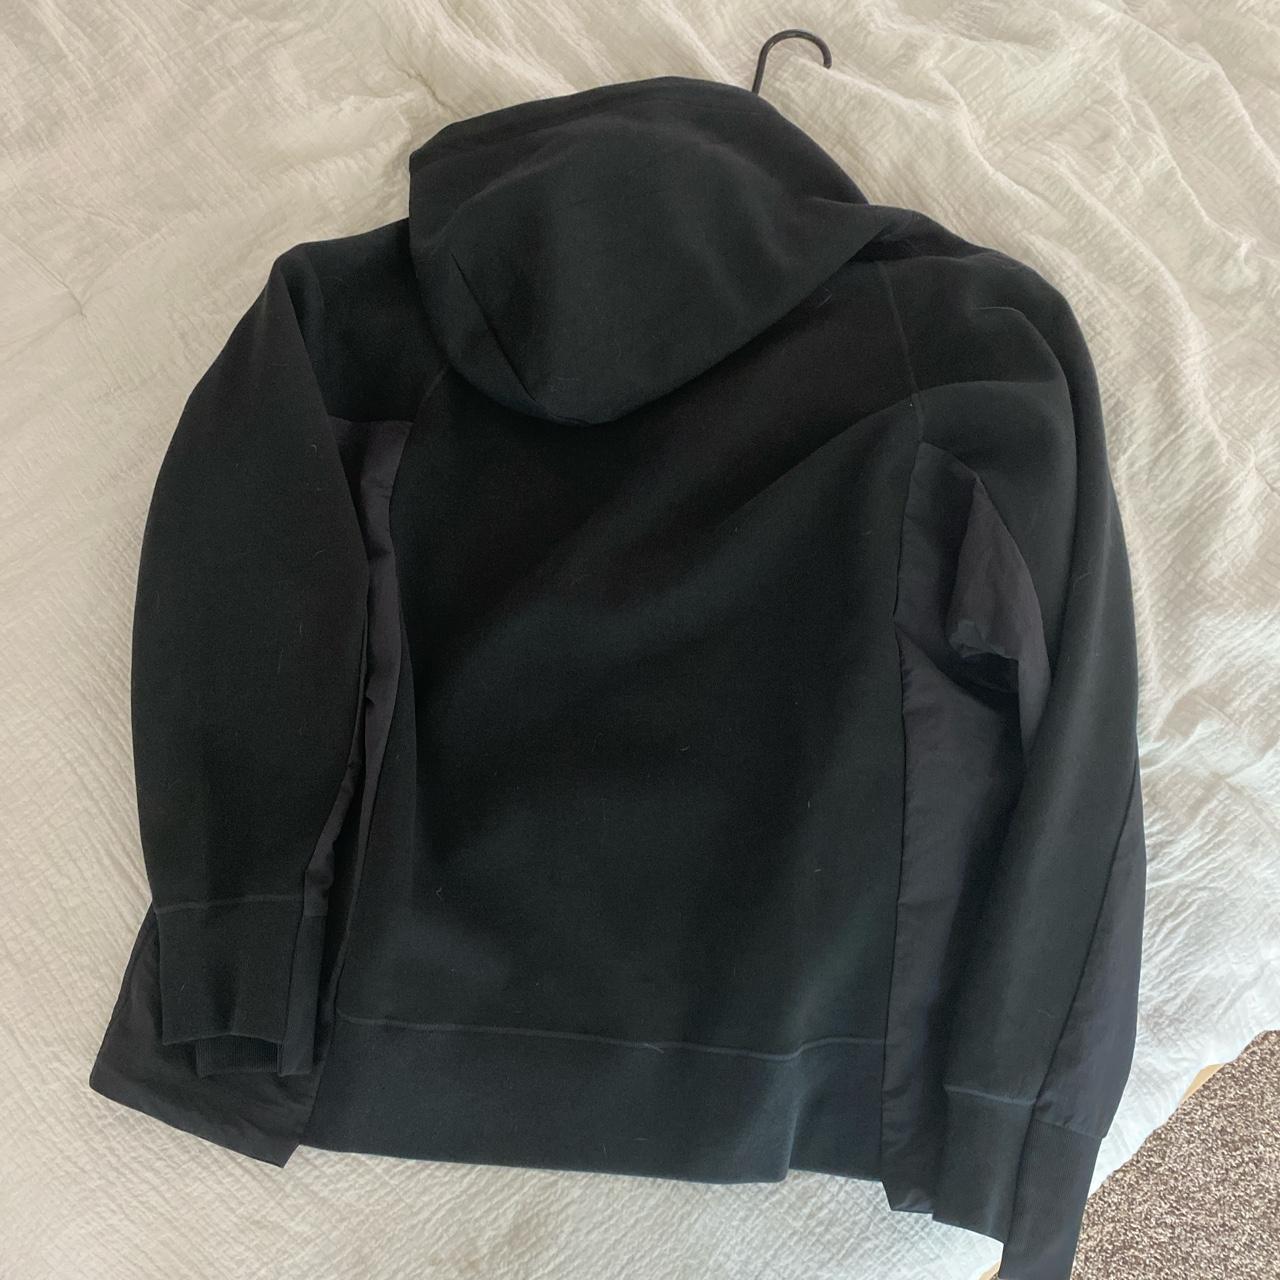 Product Image 2 - Nike sacai black hoodie size